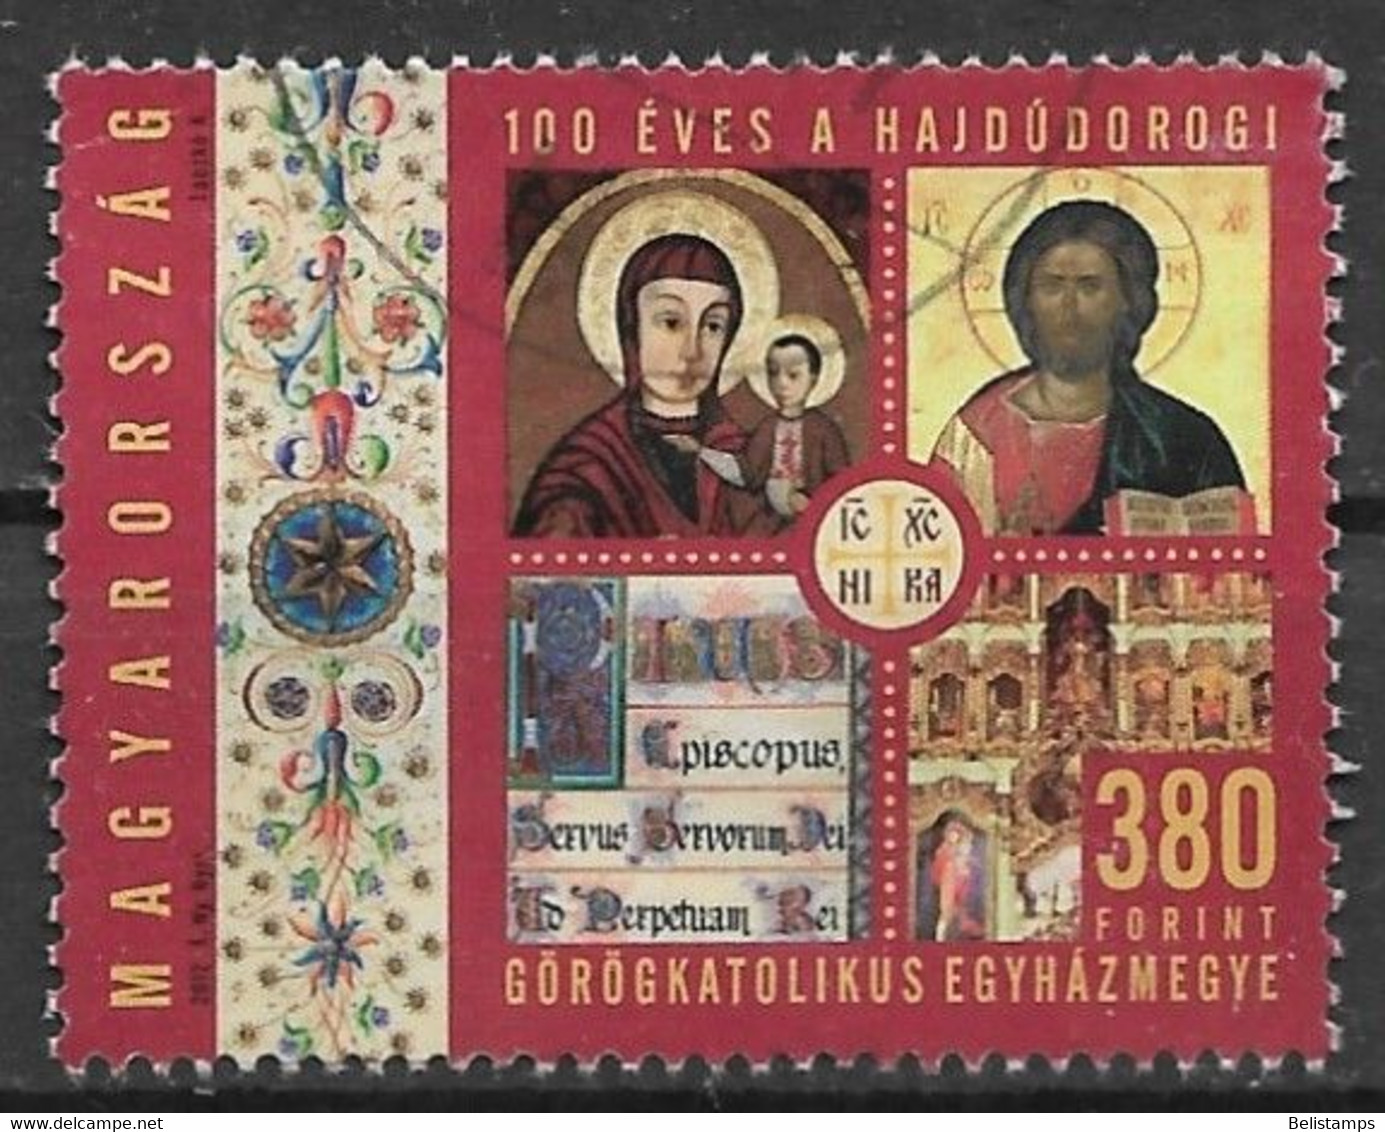 Hungary 2012. Scott #4223 (U) Greek Orthodox Diocese Of Hajdudorog, Cent  *Complete Issue* - Used Stamps